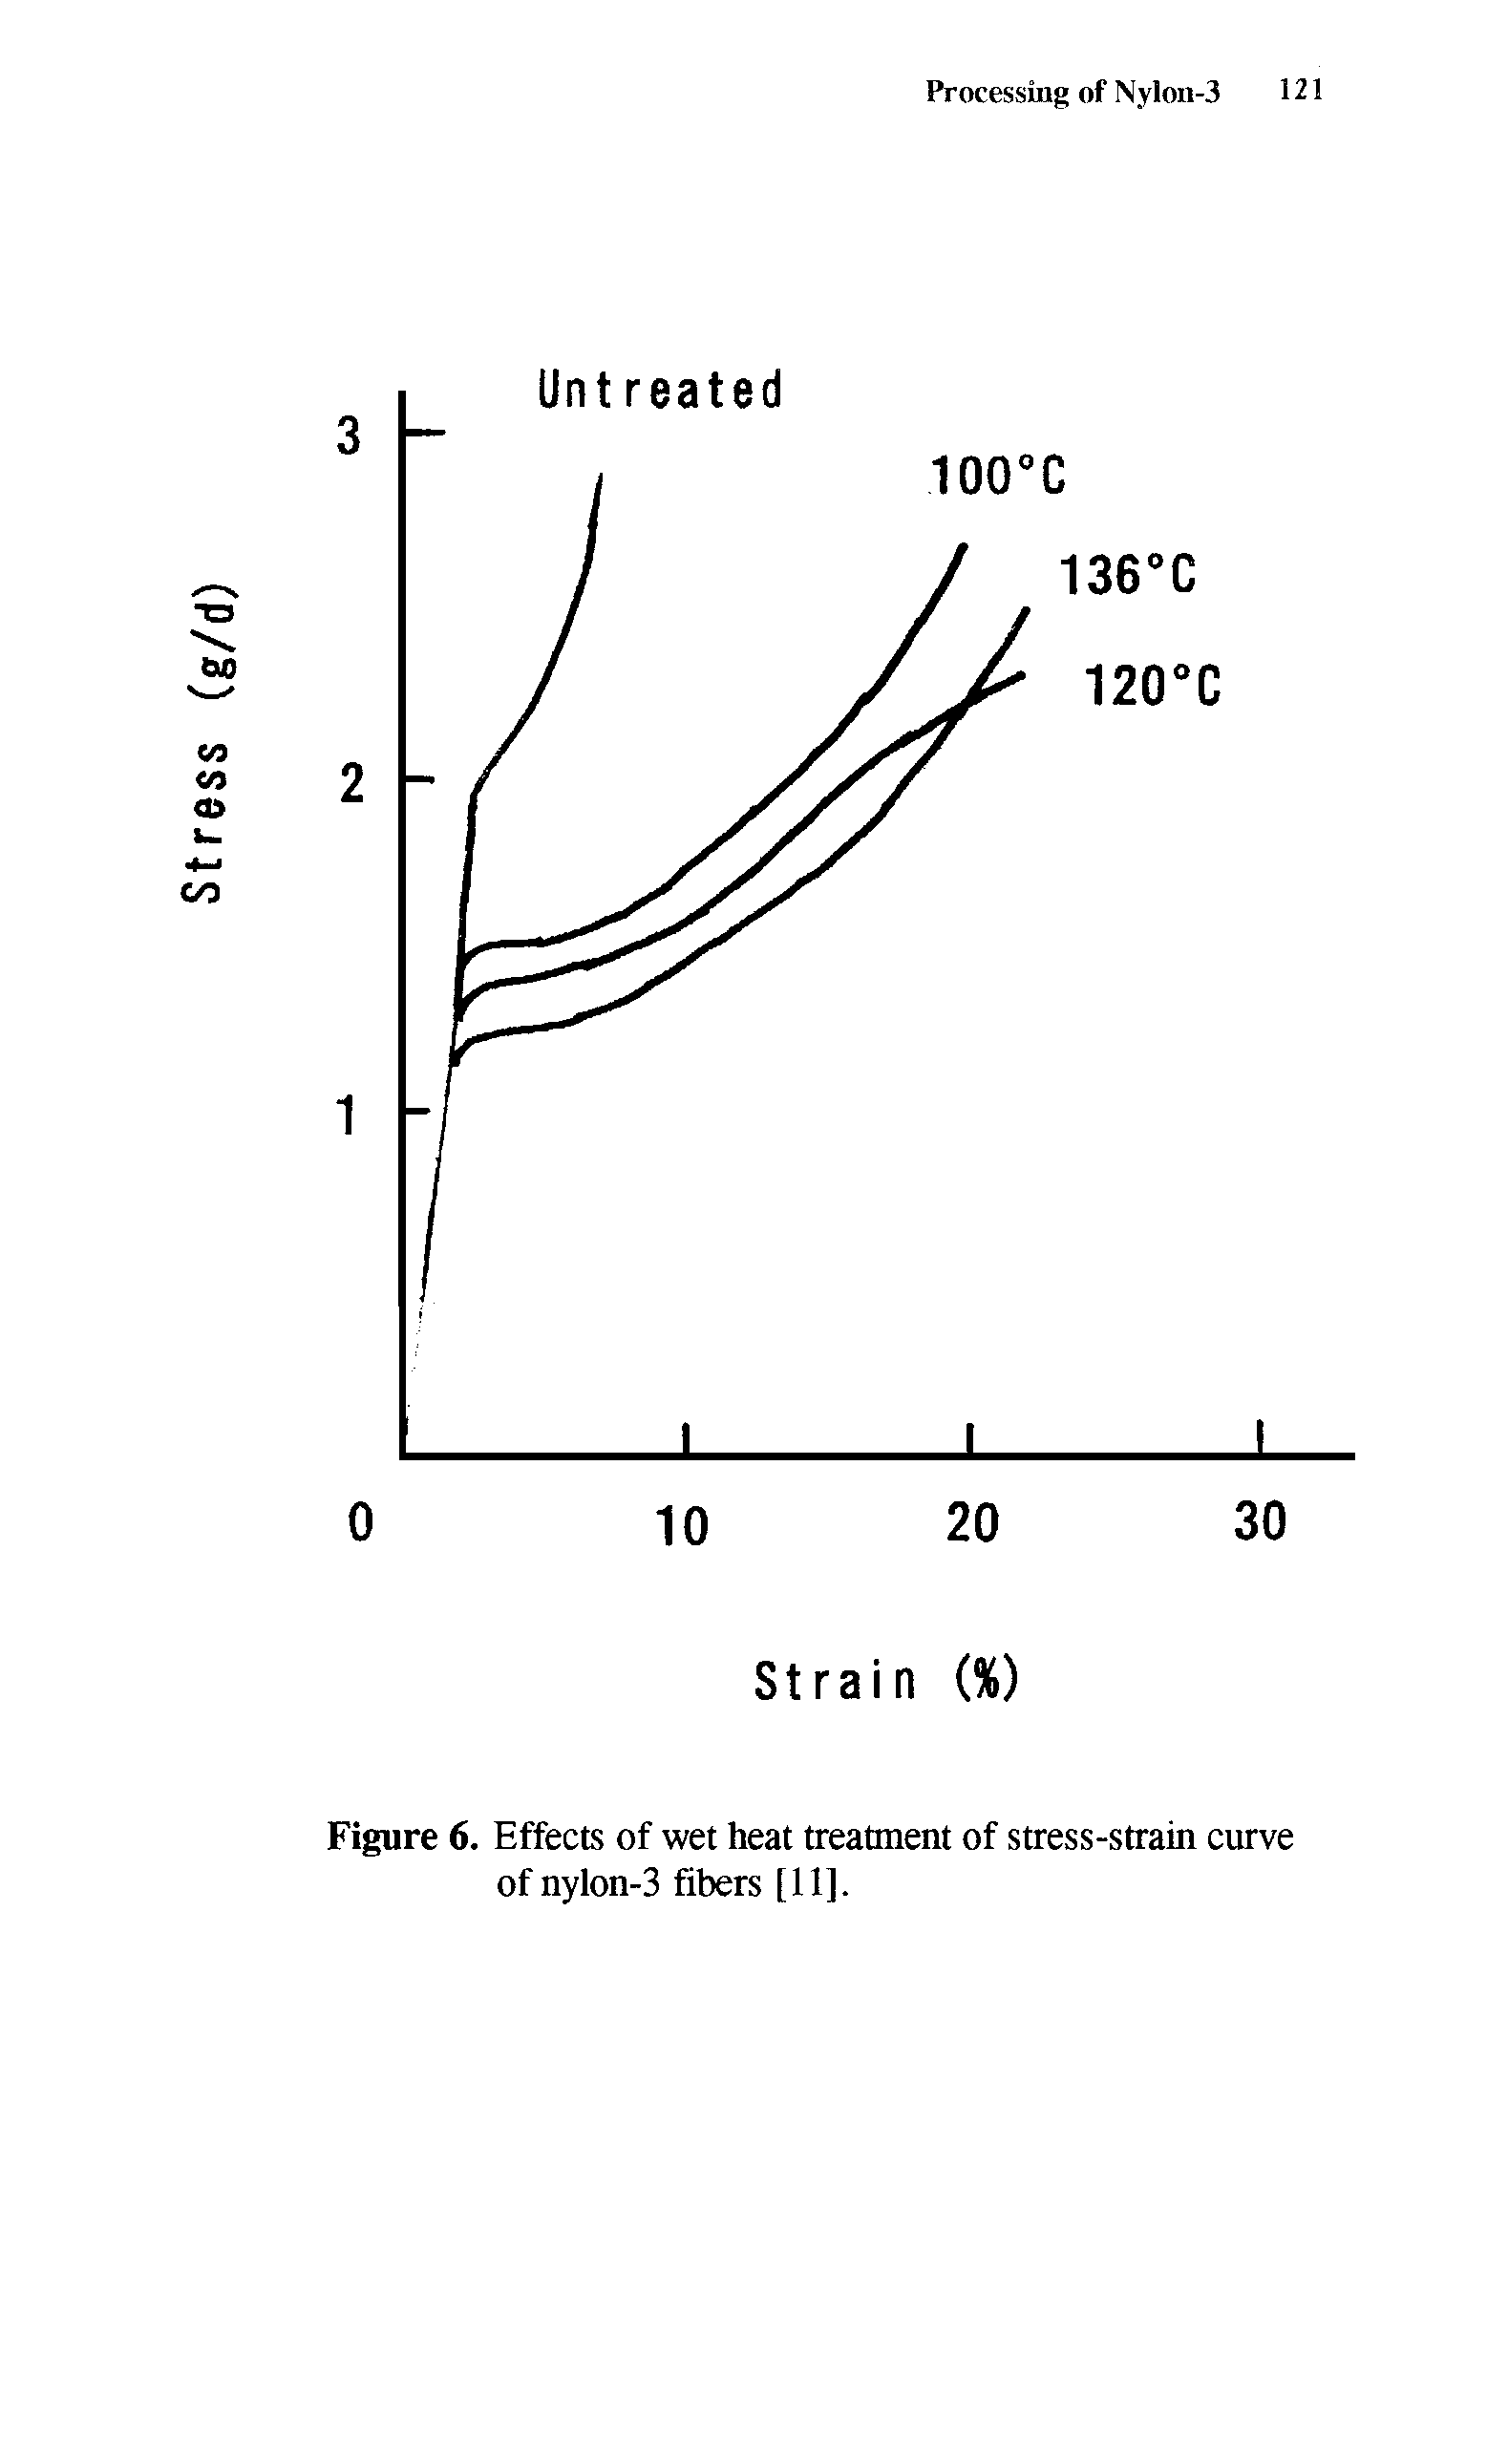 Figure 6. Effects of wet heat treatment of stress-strain curve of nylon-3 fibers [11].